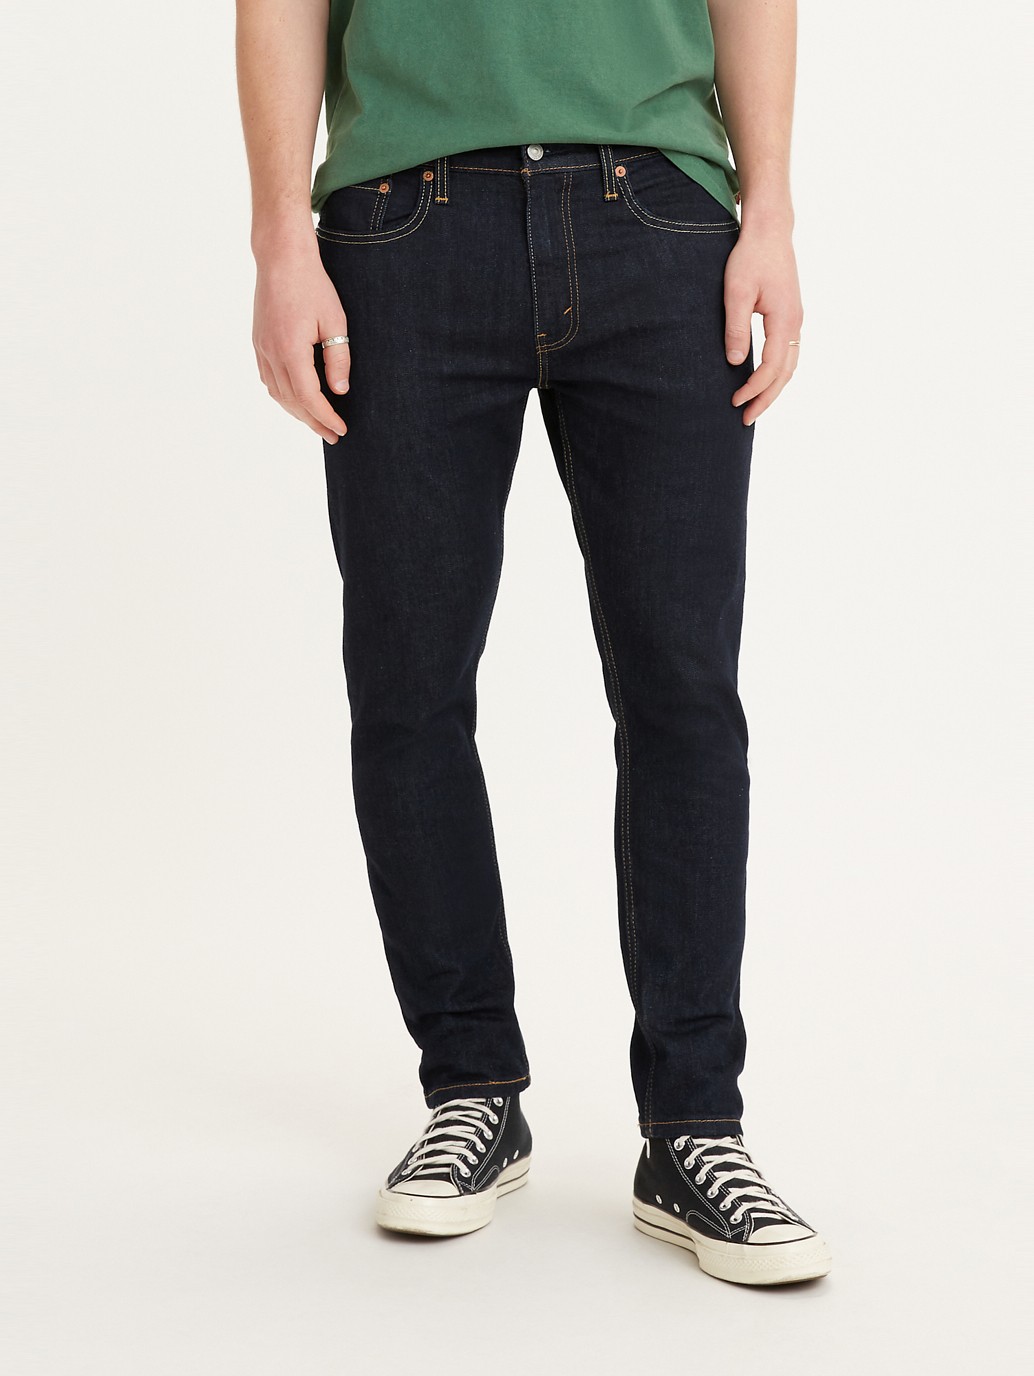 Buy Levi's® Men's 512™ Slim Taper Jeans| Levi's Official Online Store SG